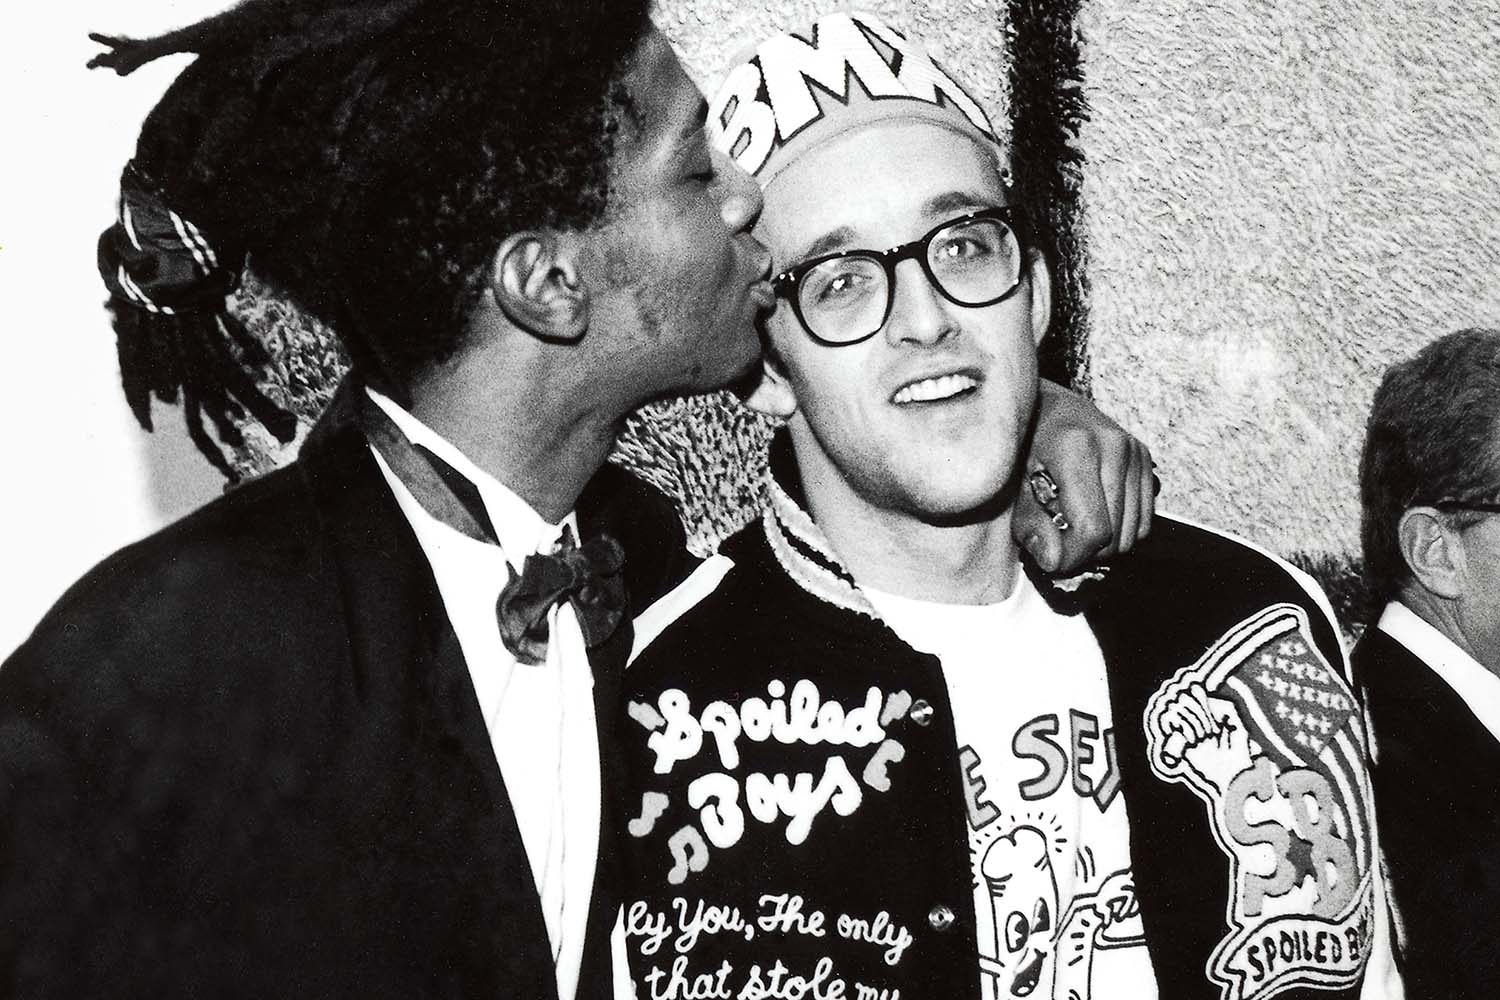 Keith Haring和Jean-Michel Basquiat